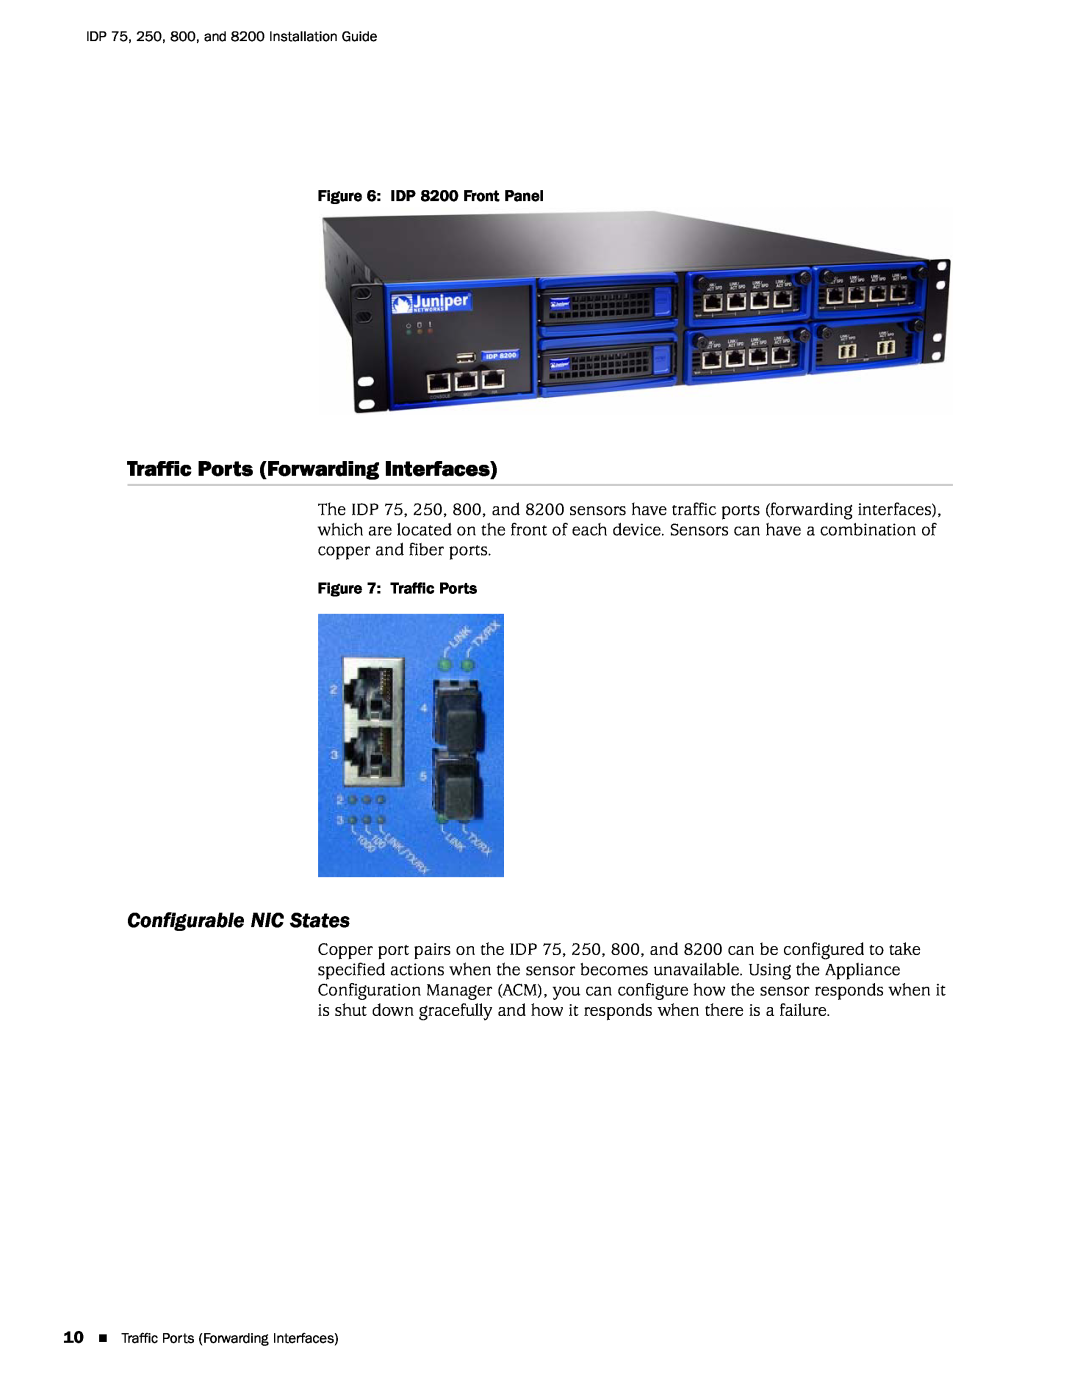 Juniper Networks IDP250, IDP8200, IDP 800, IDP75 manual Traffic Ports Forwarding Interfaces, Configurable NIC States 